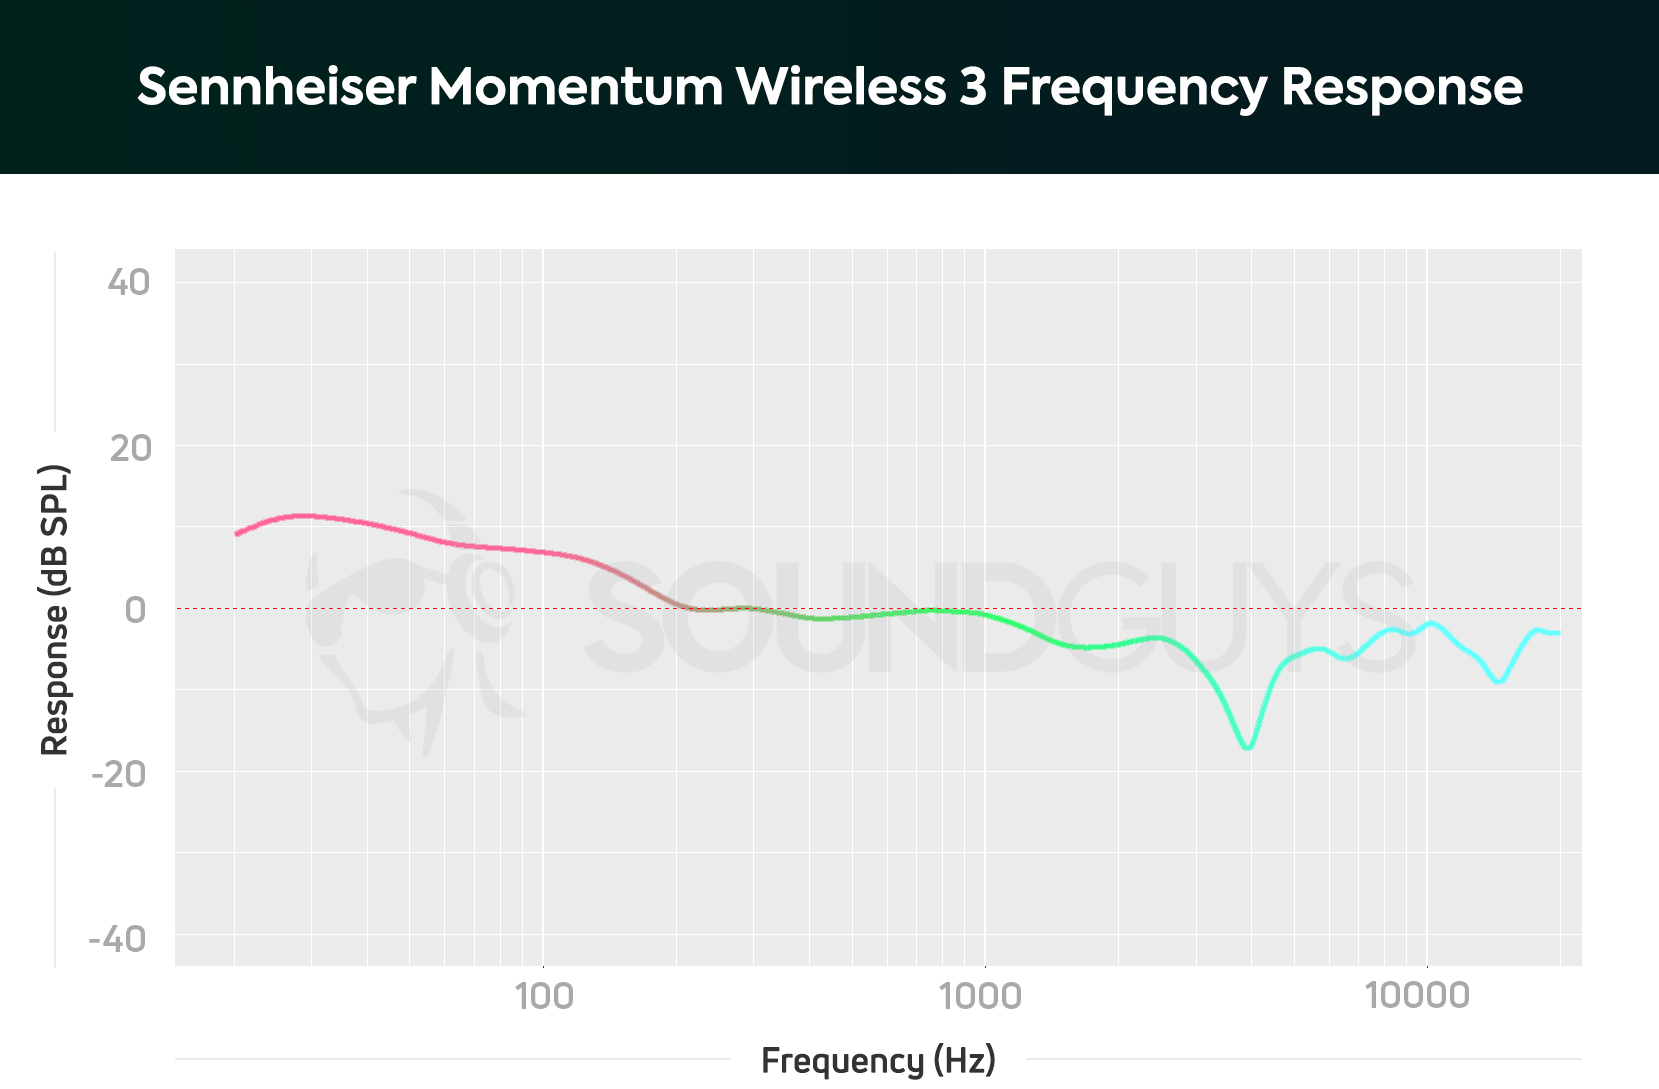 The Sennheiser Momentum Wireless 3 frequency response chart.